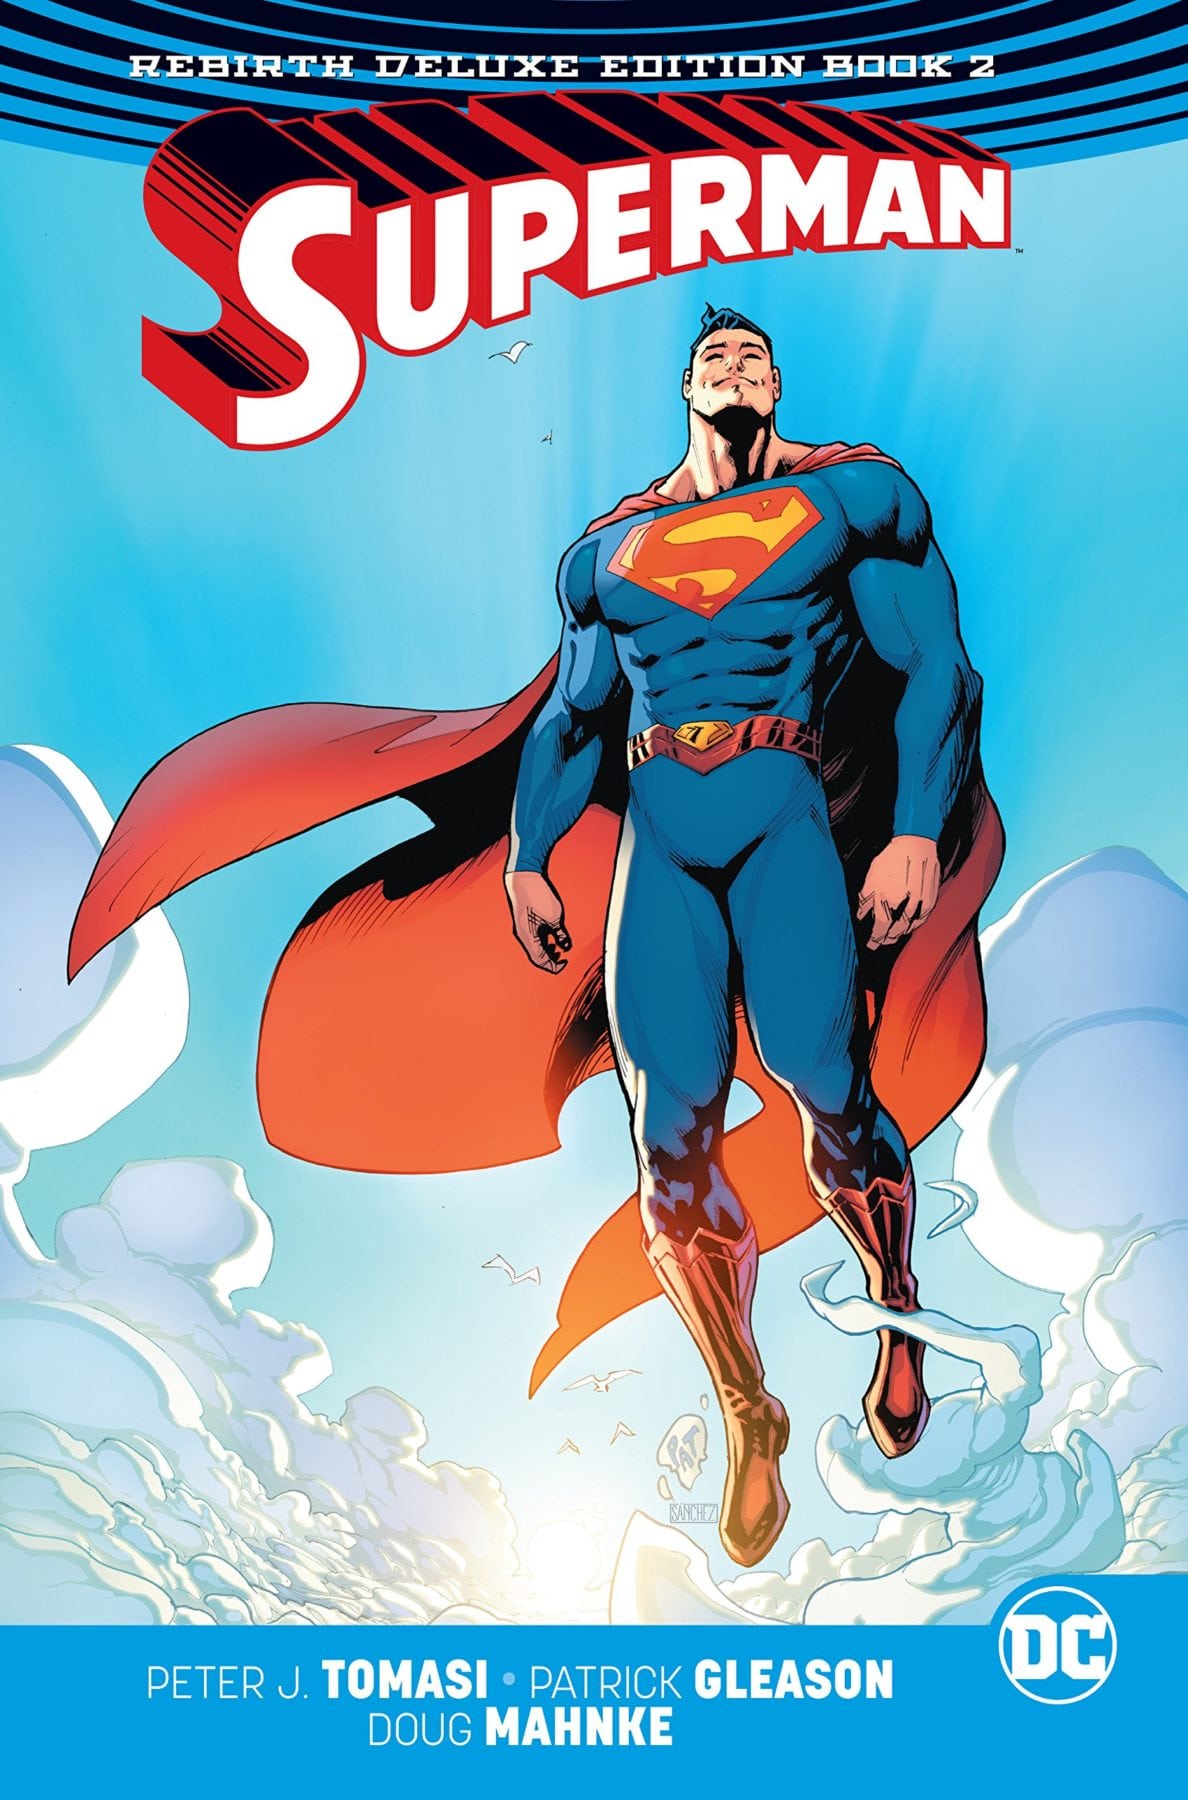 Comic Book Review - Superman: Rebirth Deluxe Edition Book 21188 x 1800